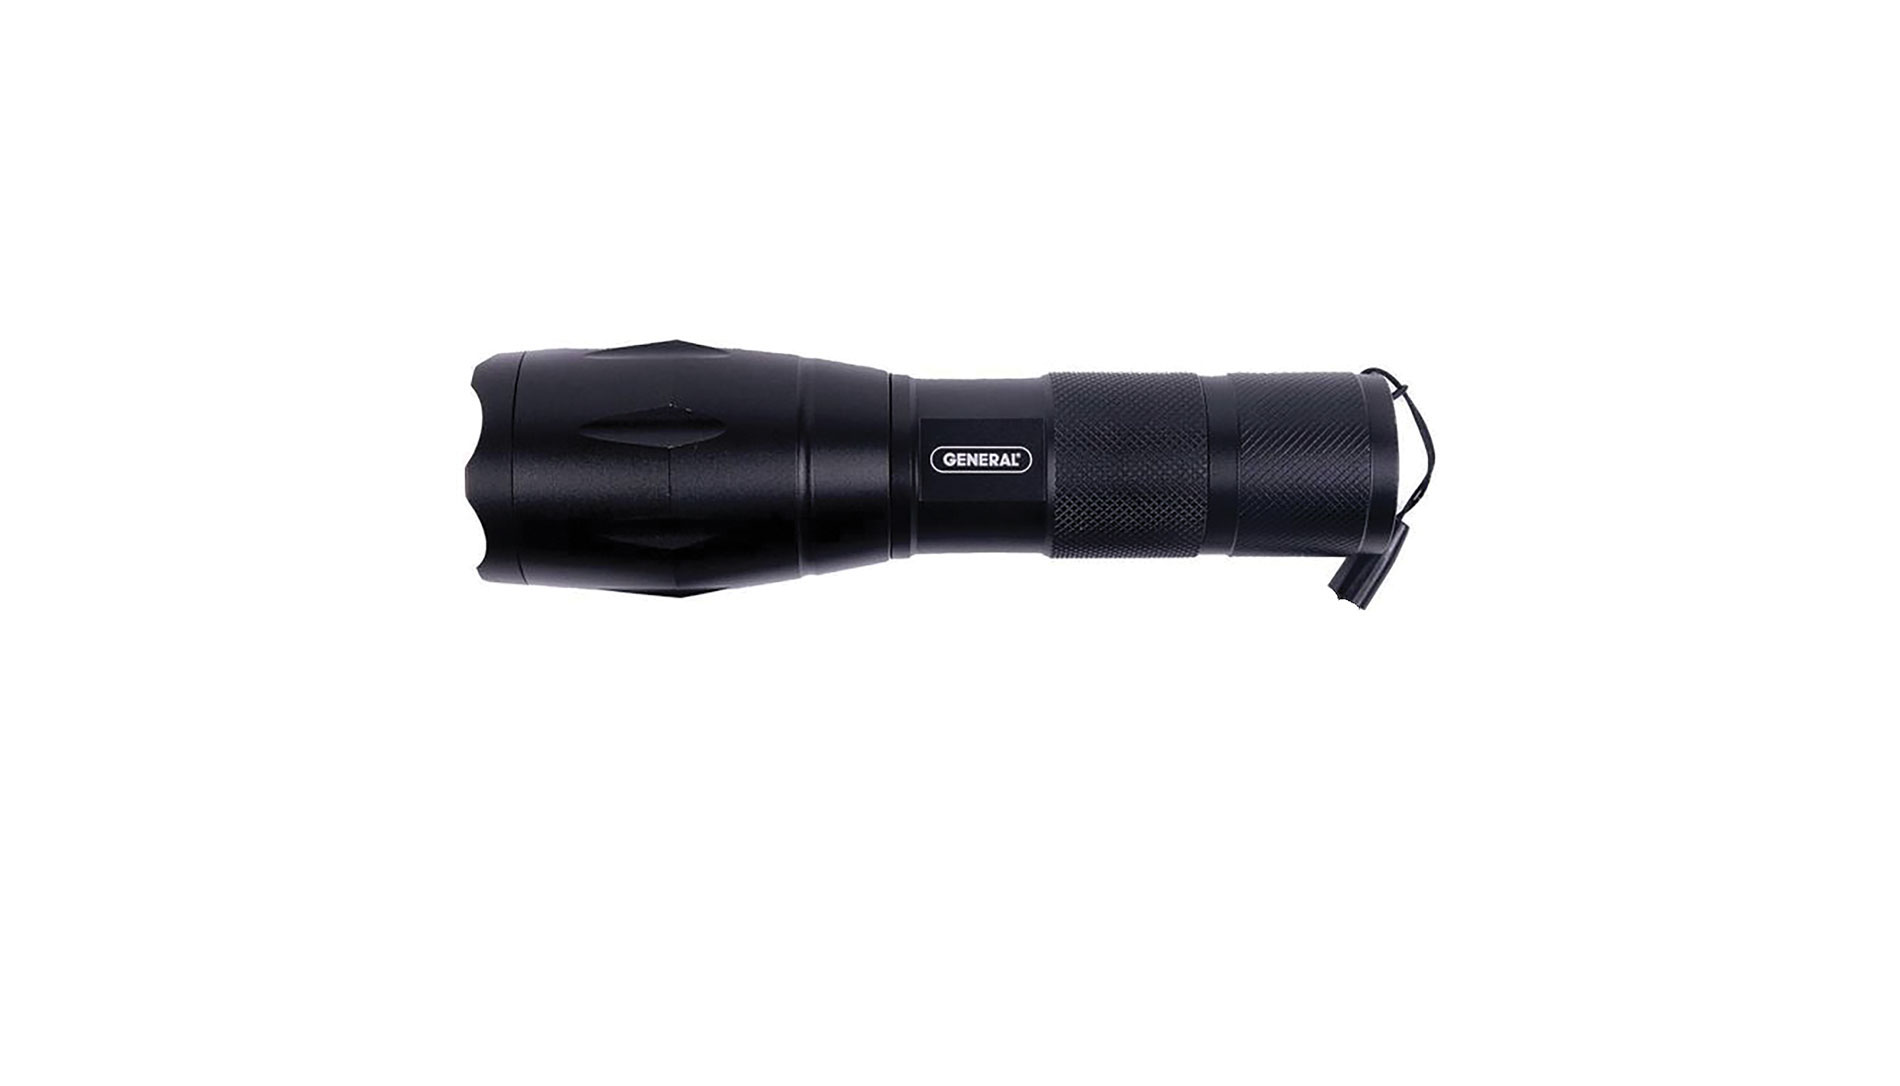 Black flashlight. Image by General Tools.